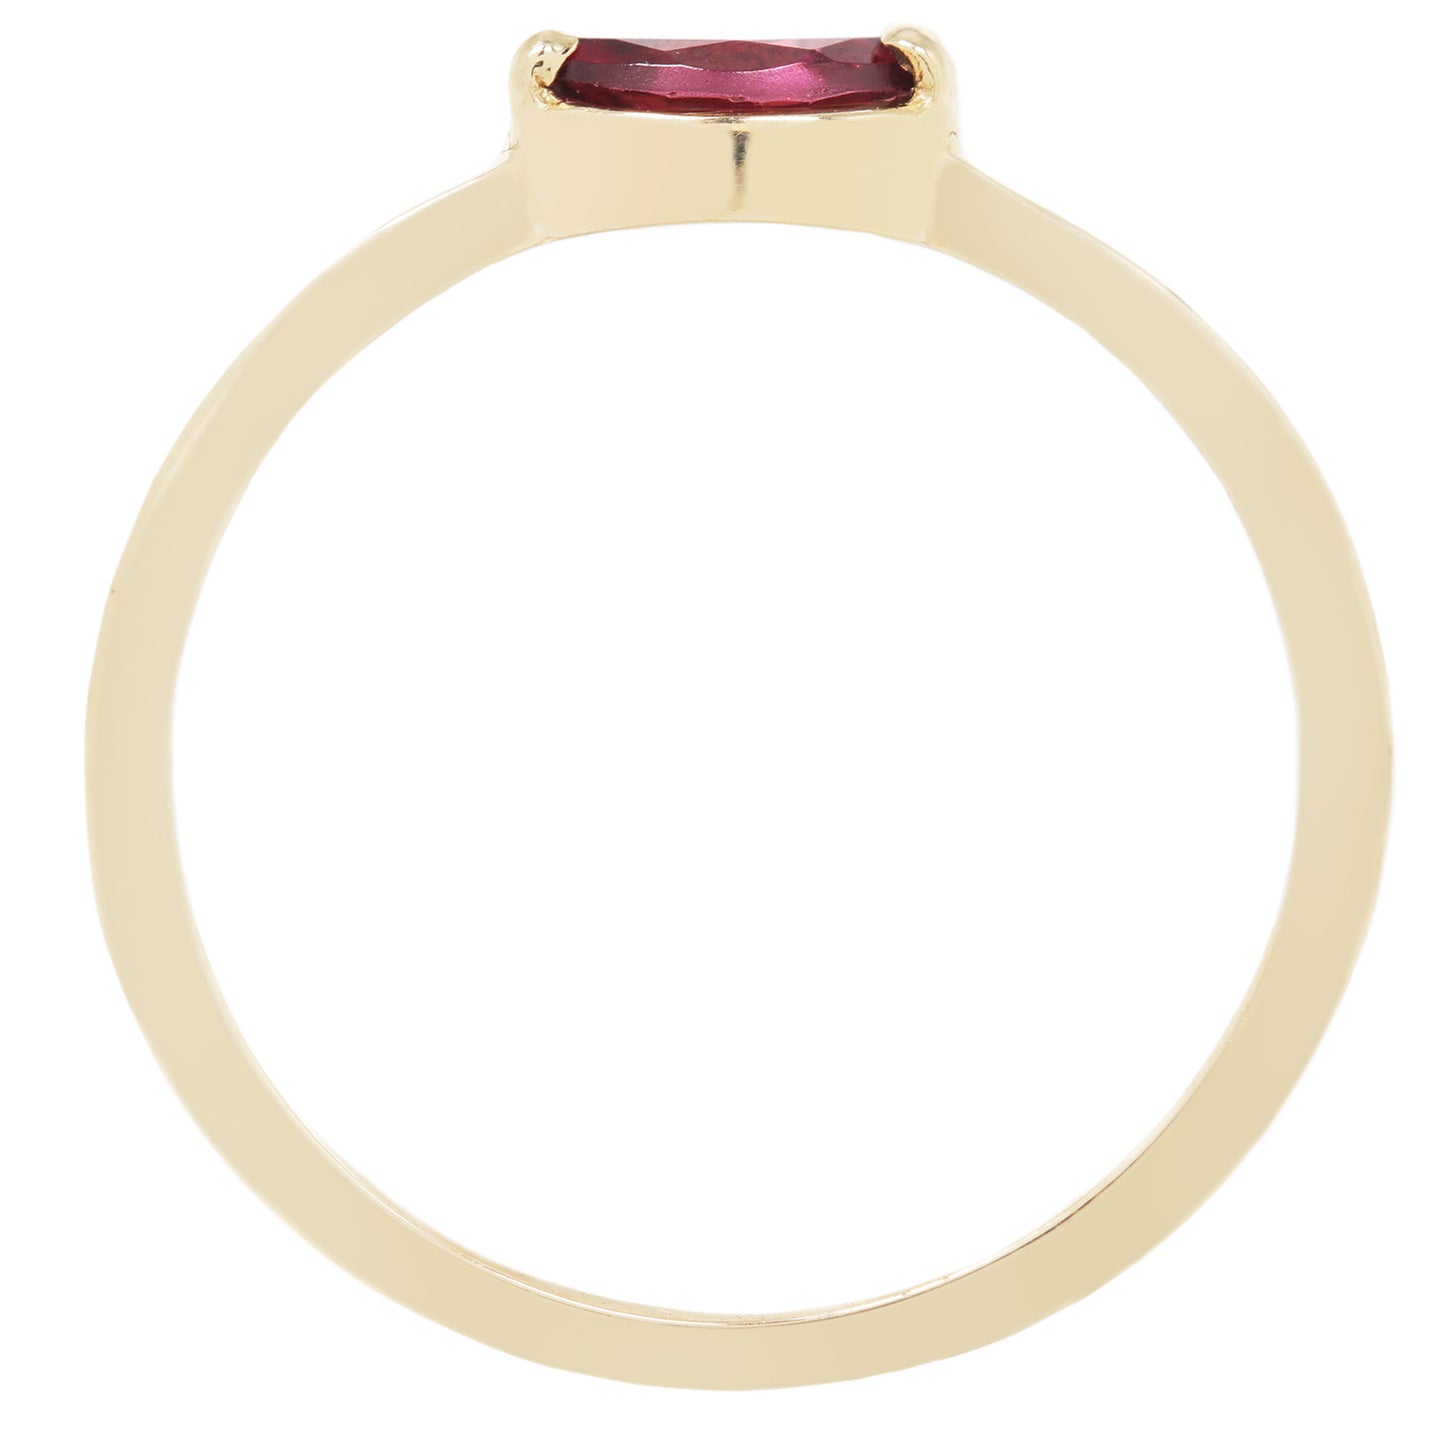 Garnet Marquise Ring